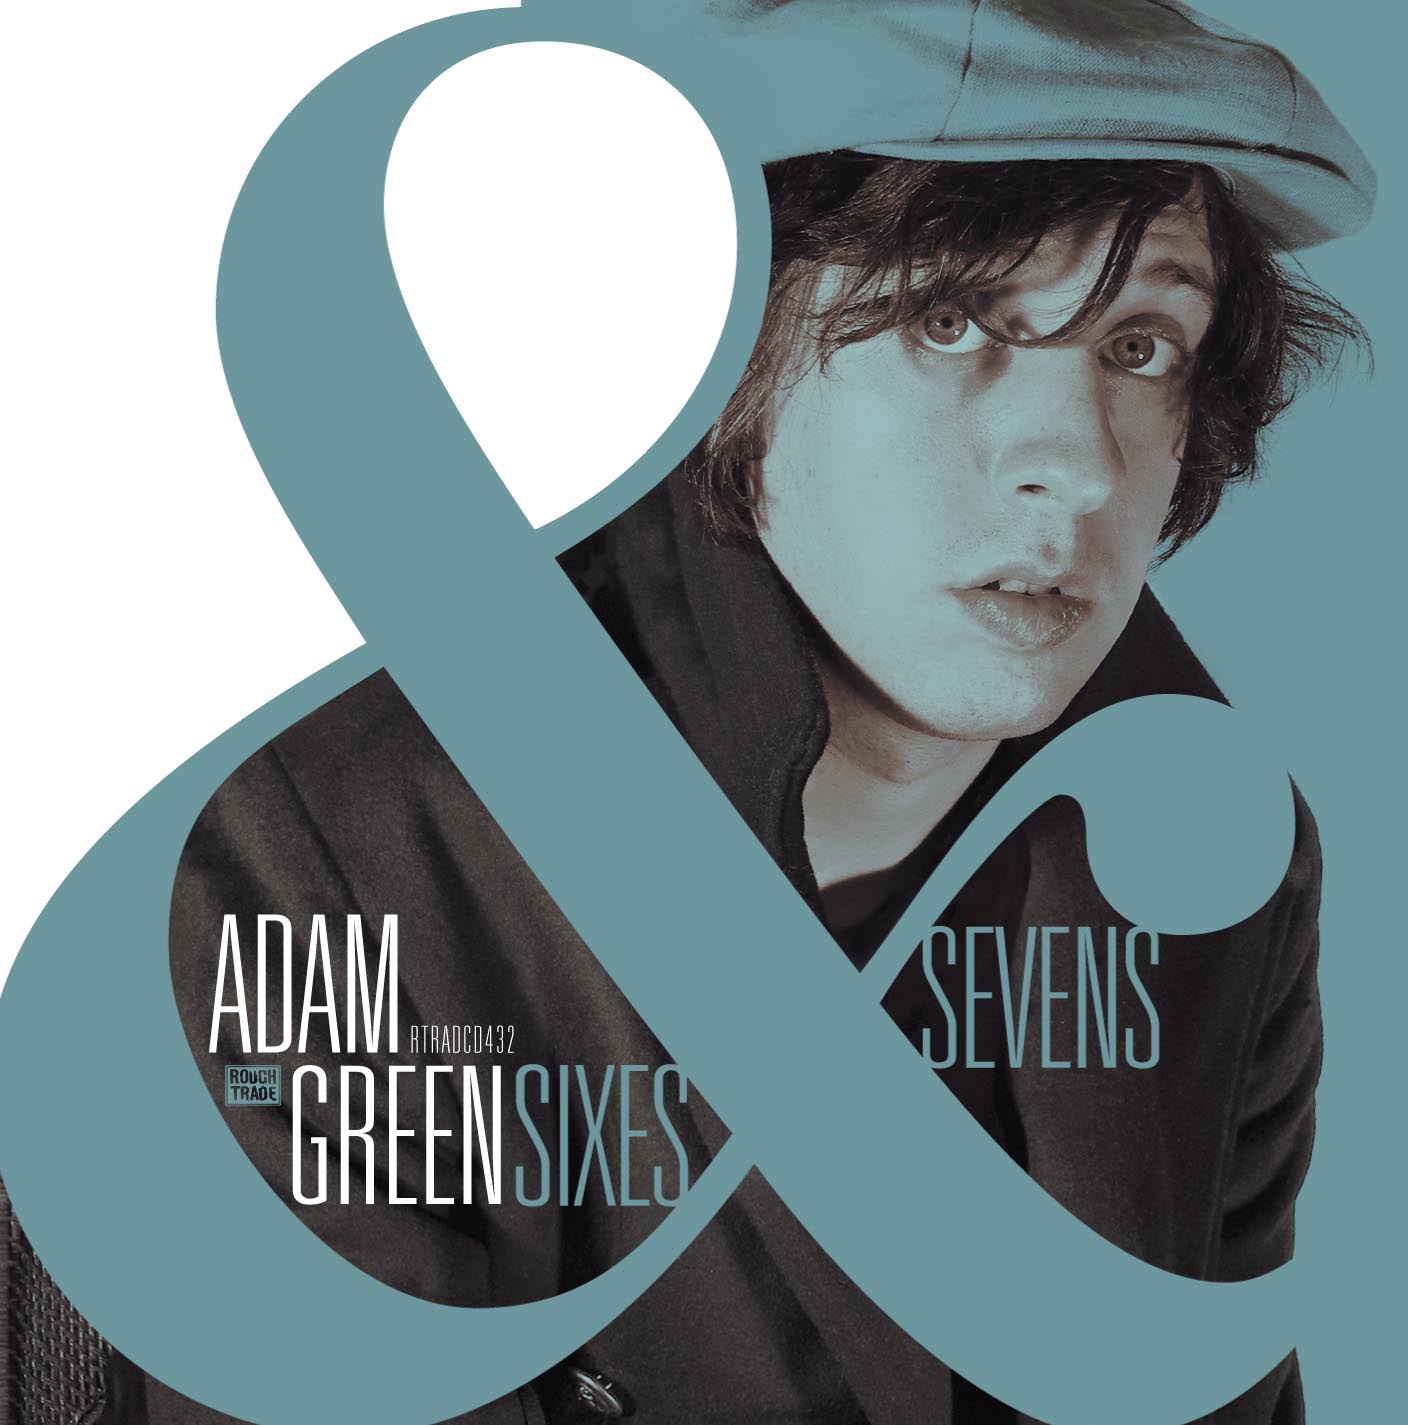 adamgreen_sixessevens_albumcover.jpg